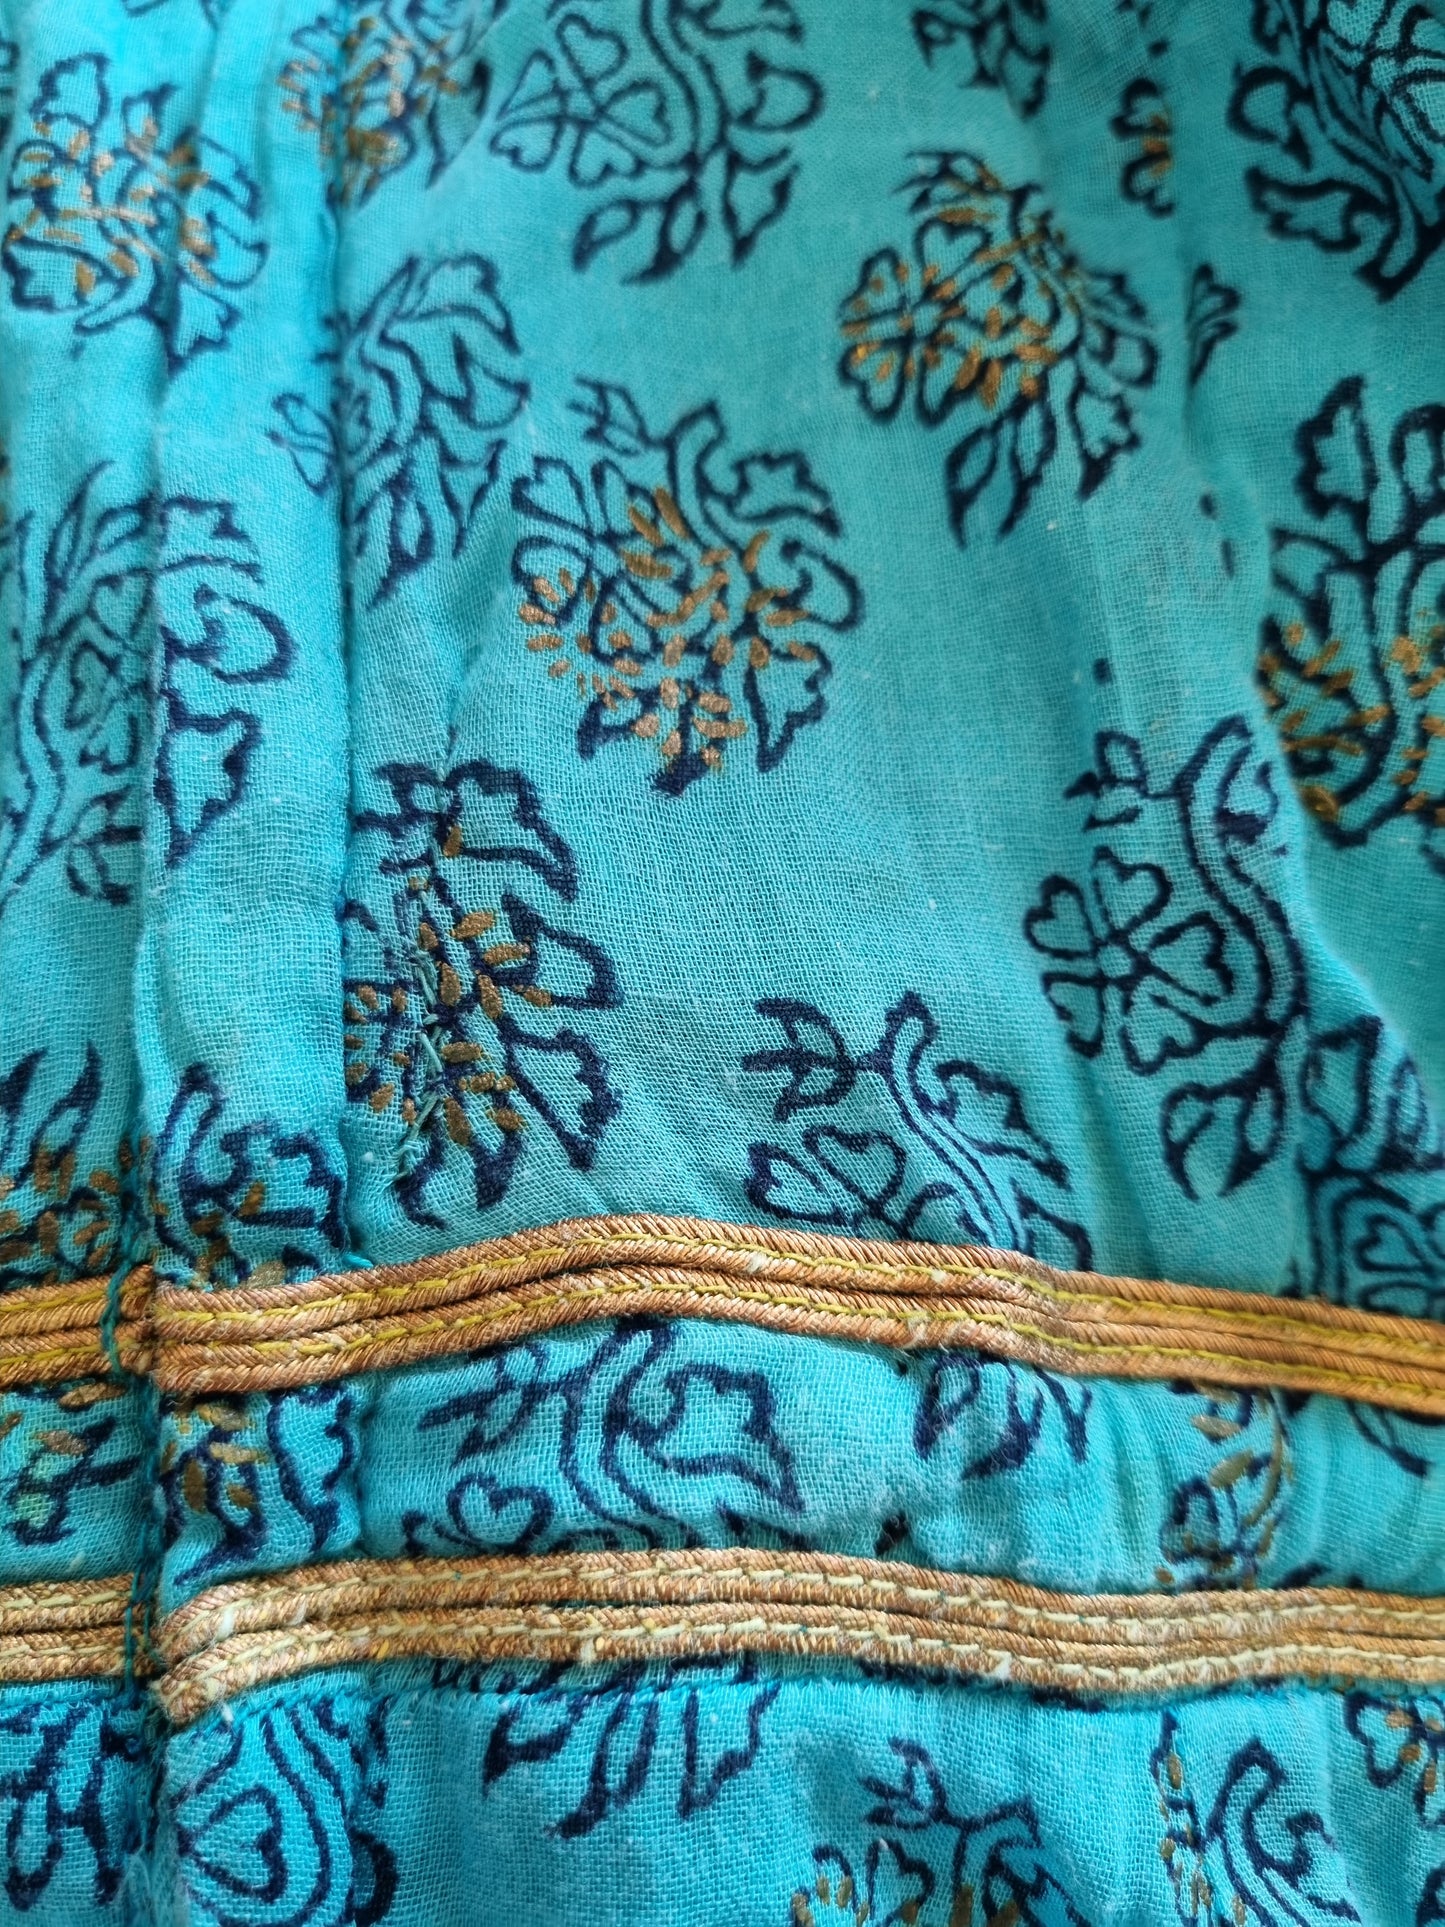 Vintage Indian Earlybird maxi dress S